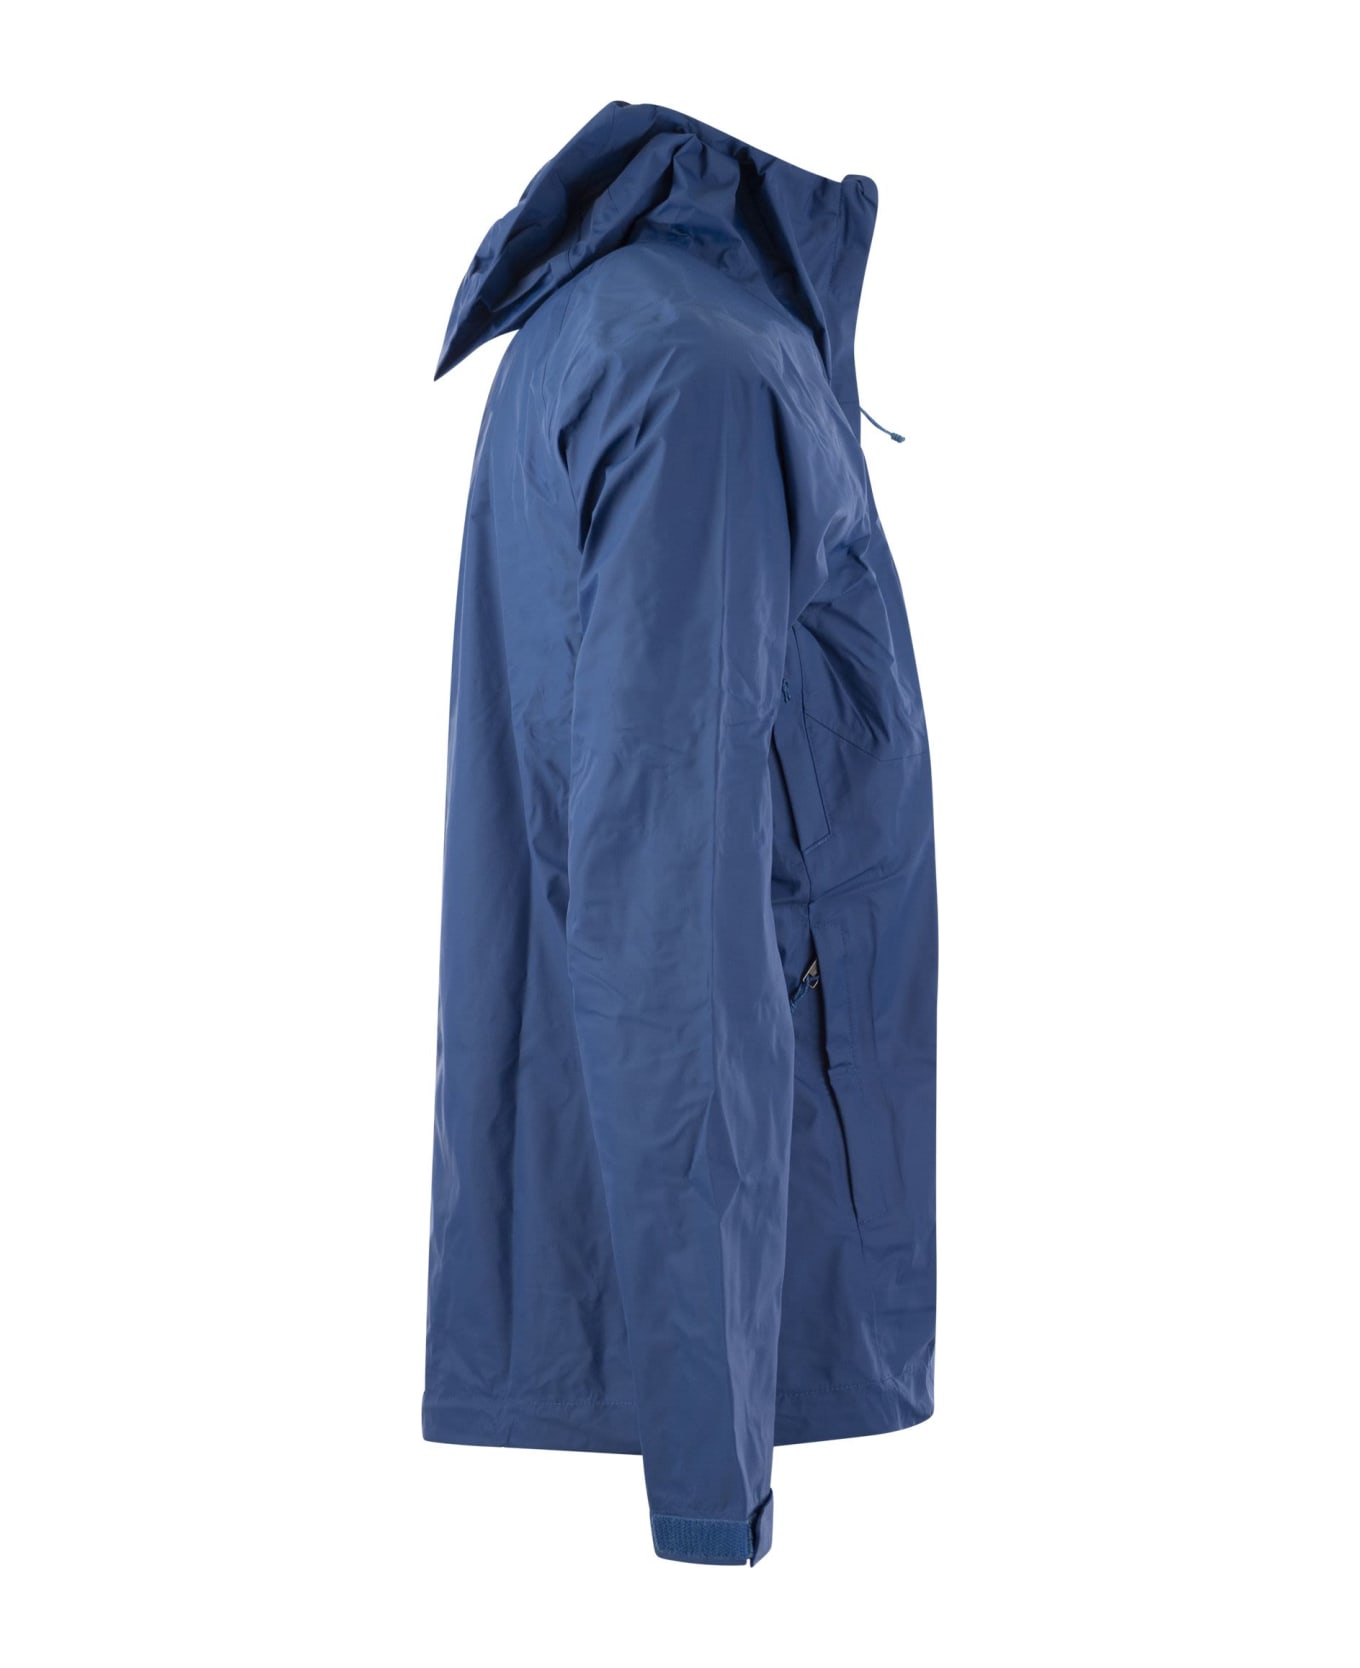 Patagonia Nylon Rainproof Jacket - Enlb ジャケット